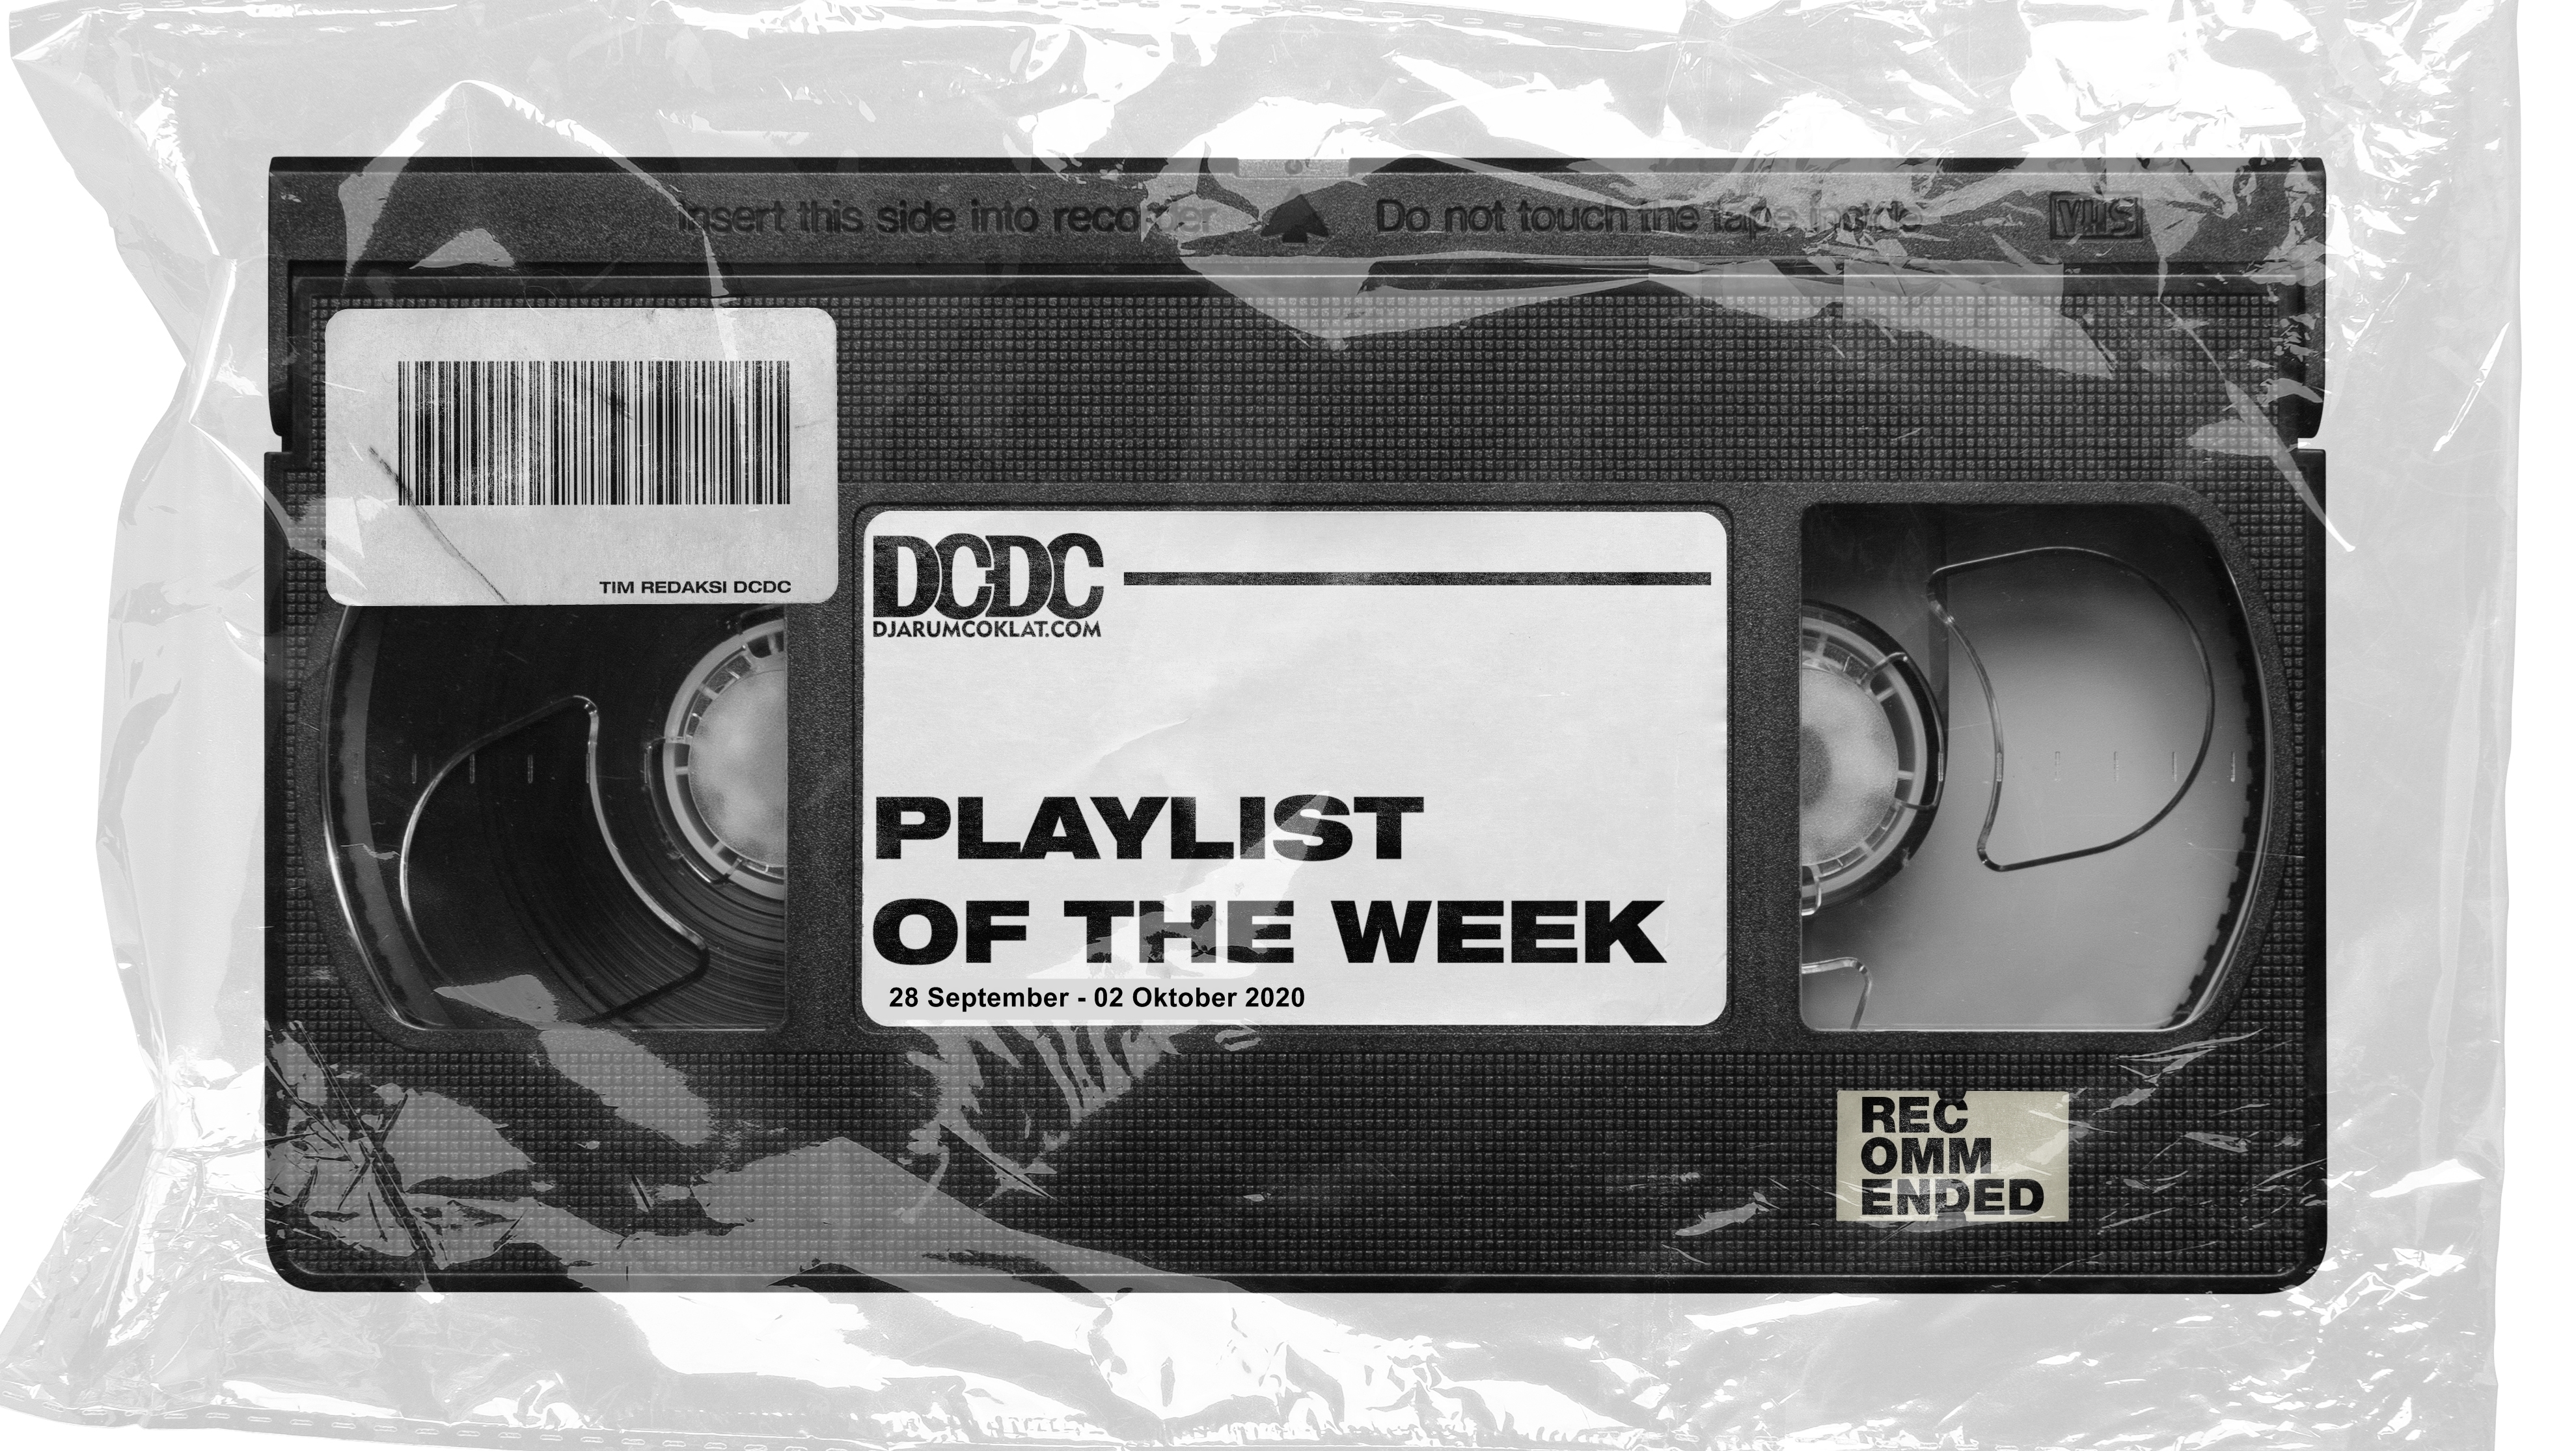 Playlist Of The Week (28 September - 02 Oktober 2020)